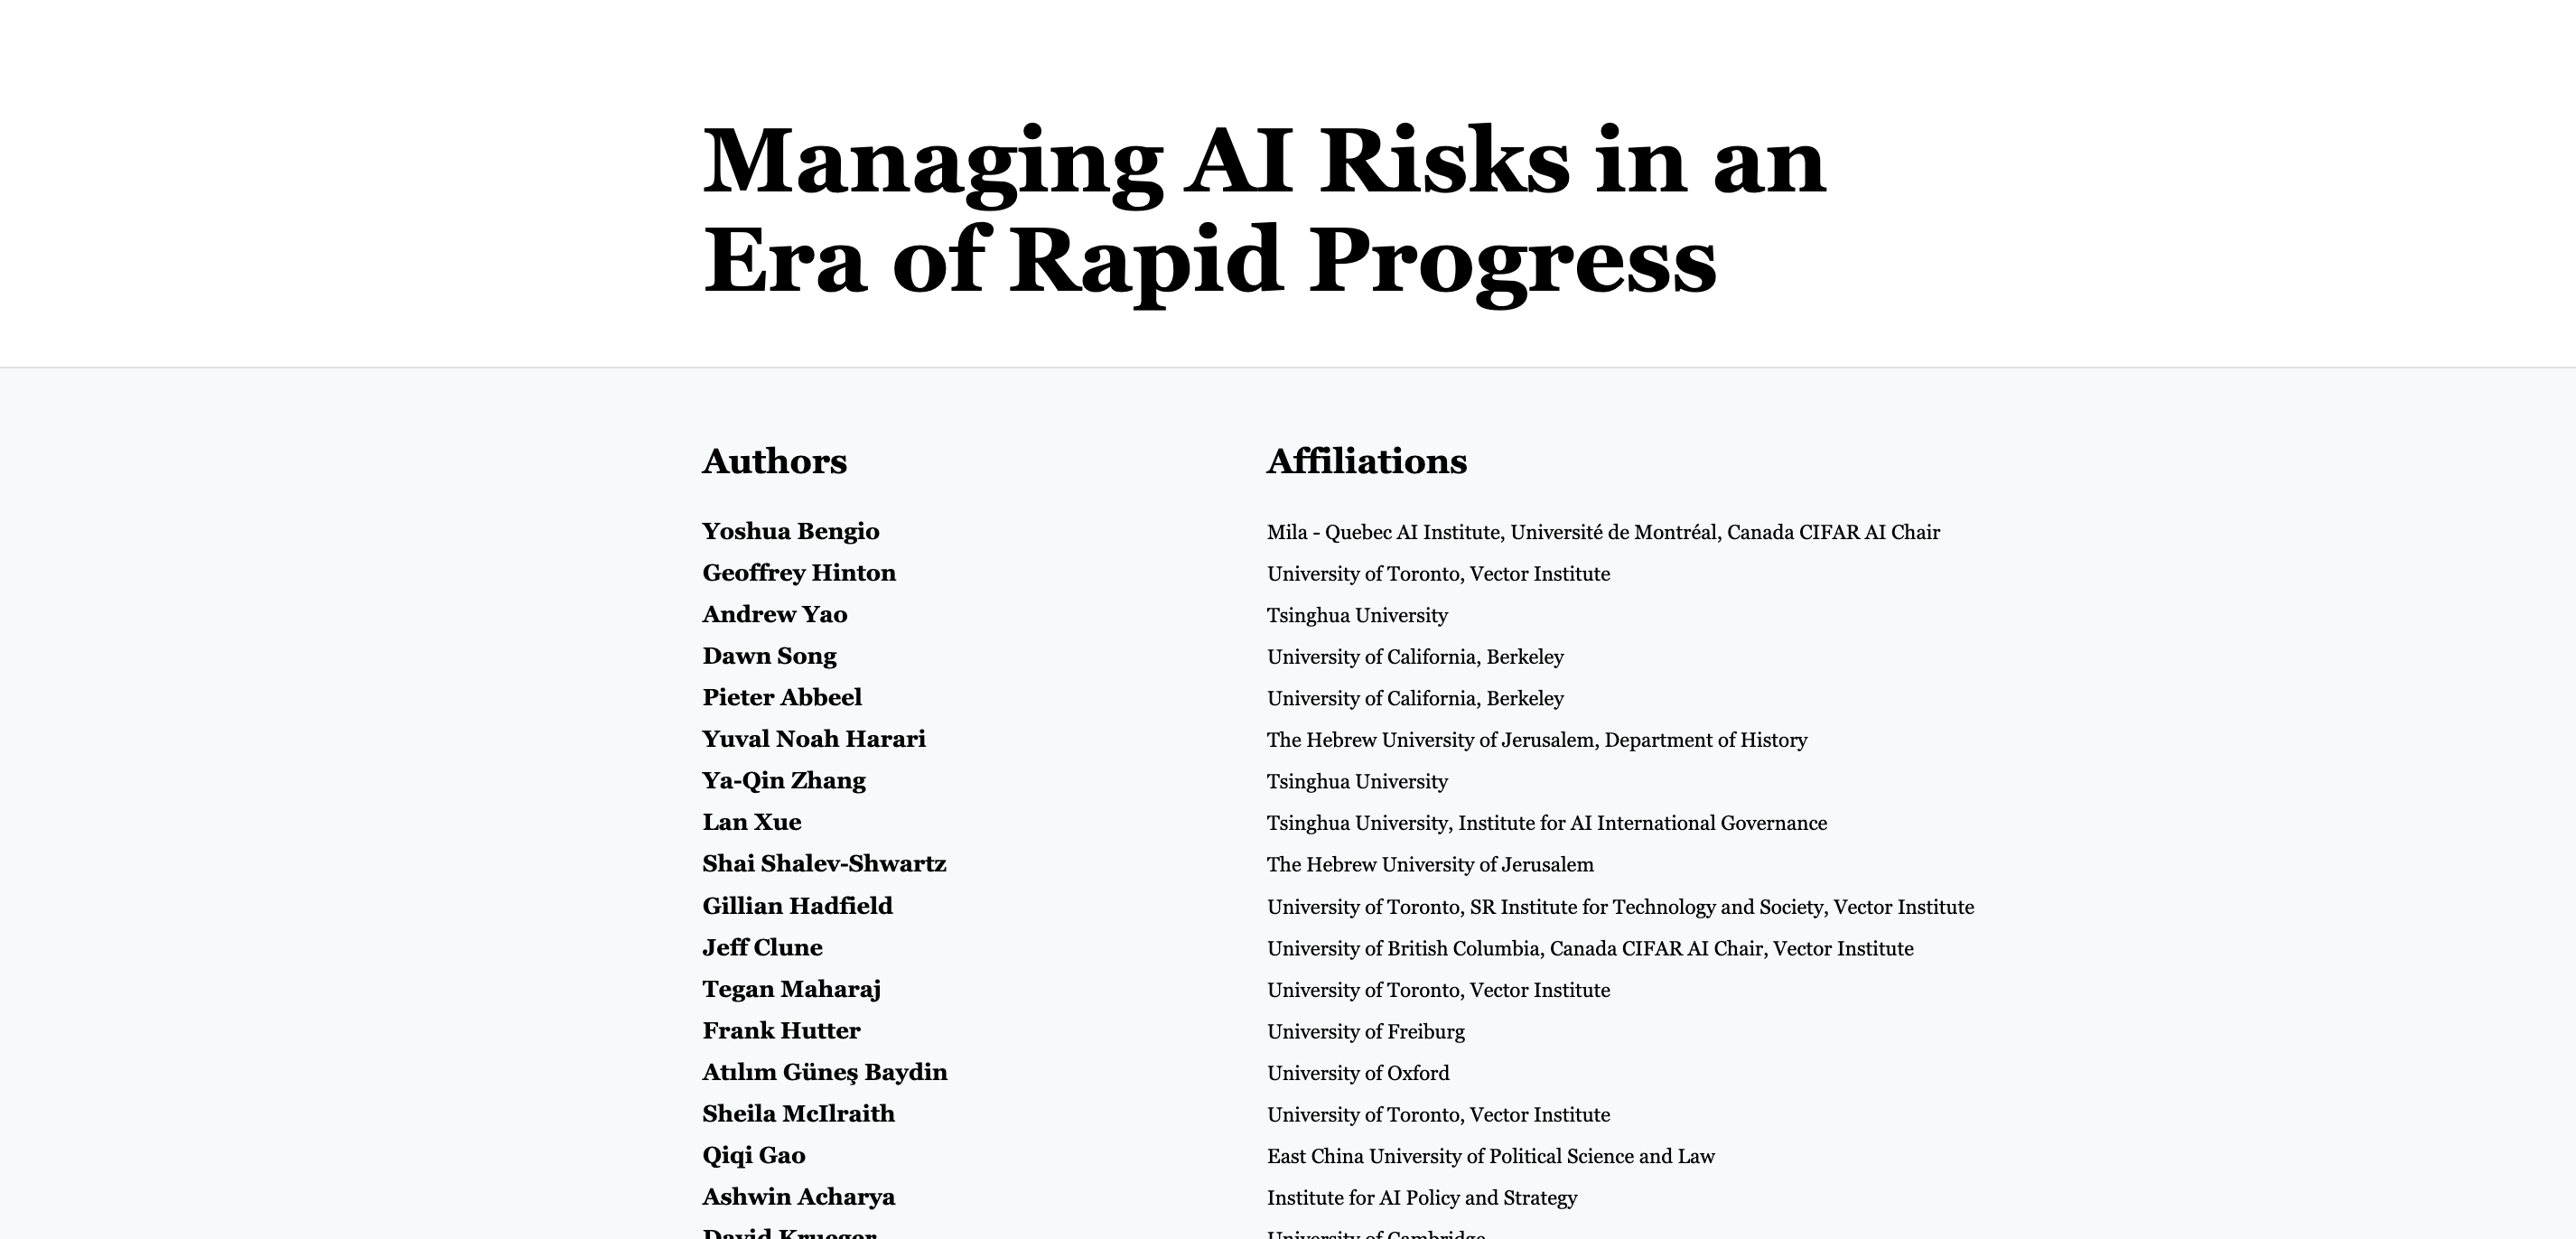 Managing AI Risks in an Era of Rapid Progress